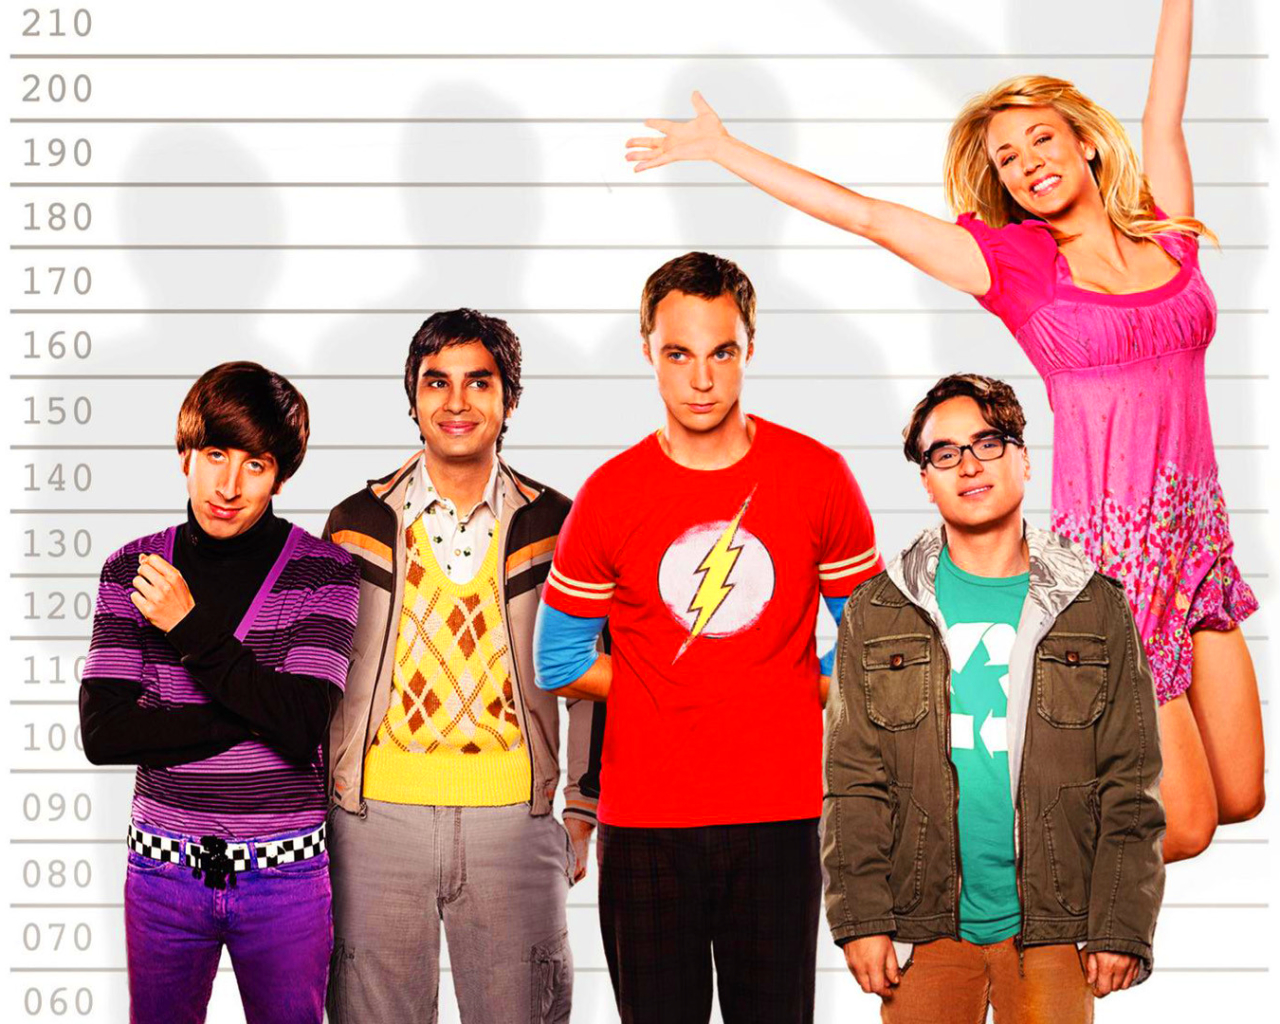 The Big Bang Theory Cast